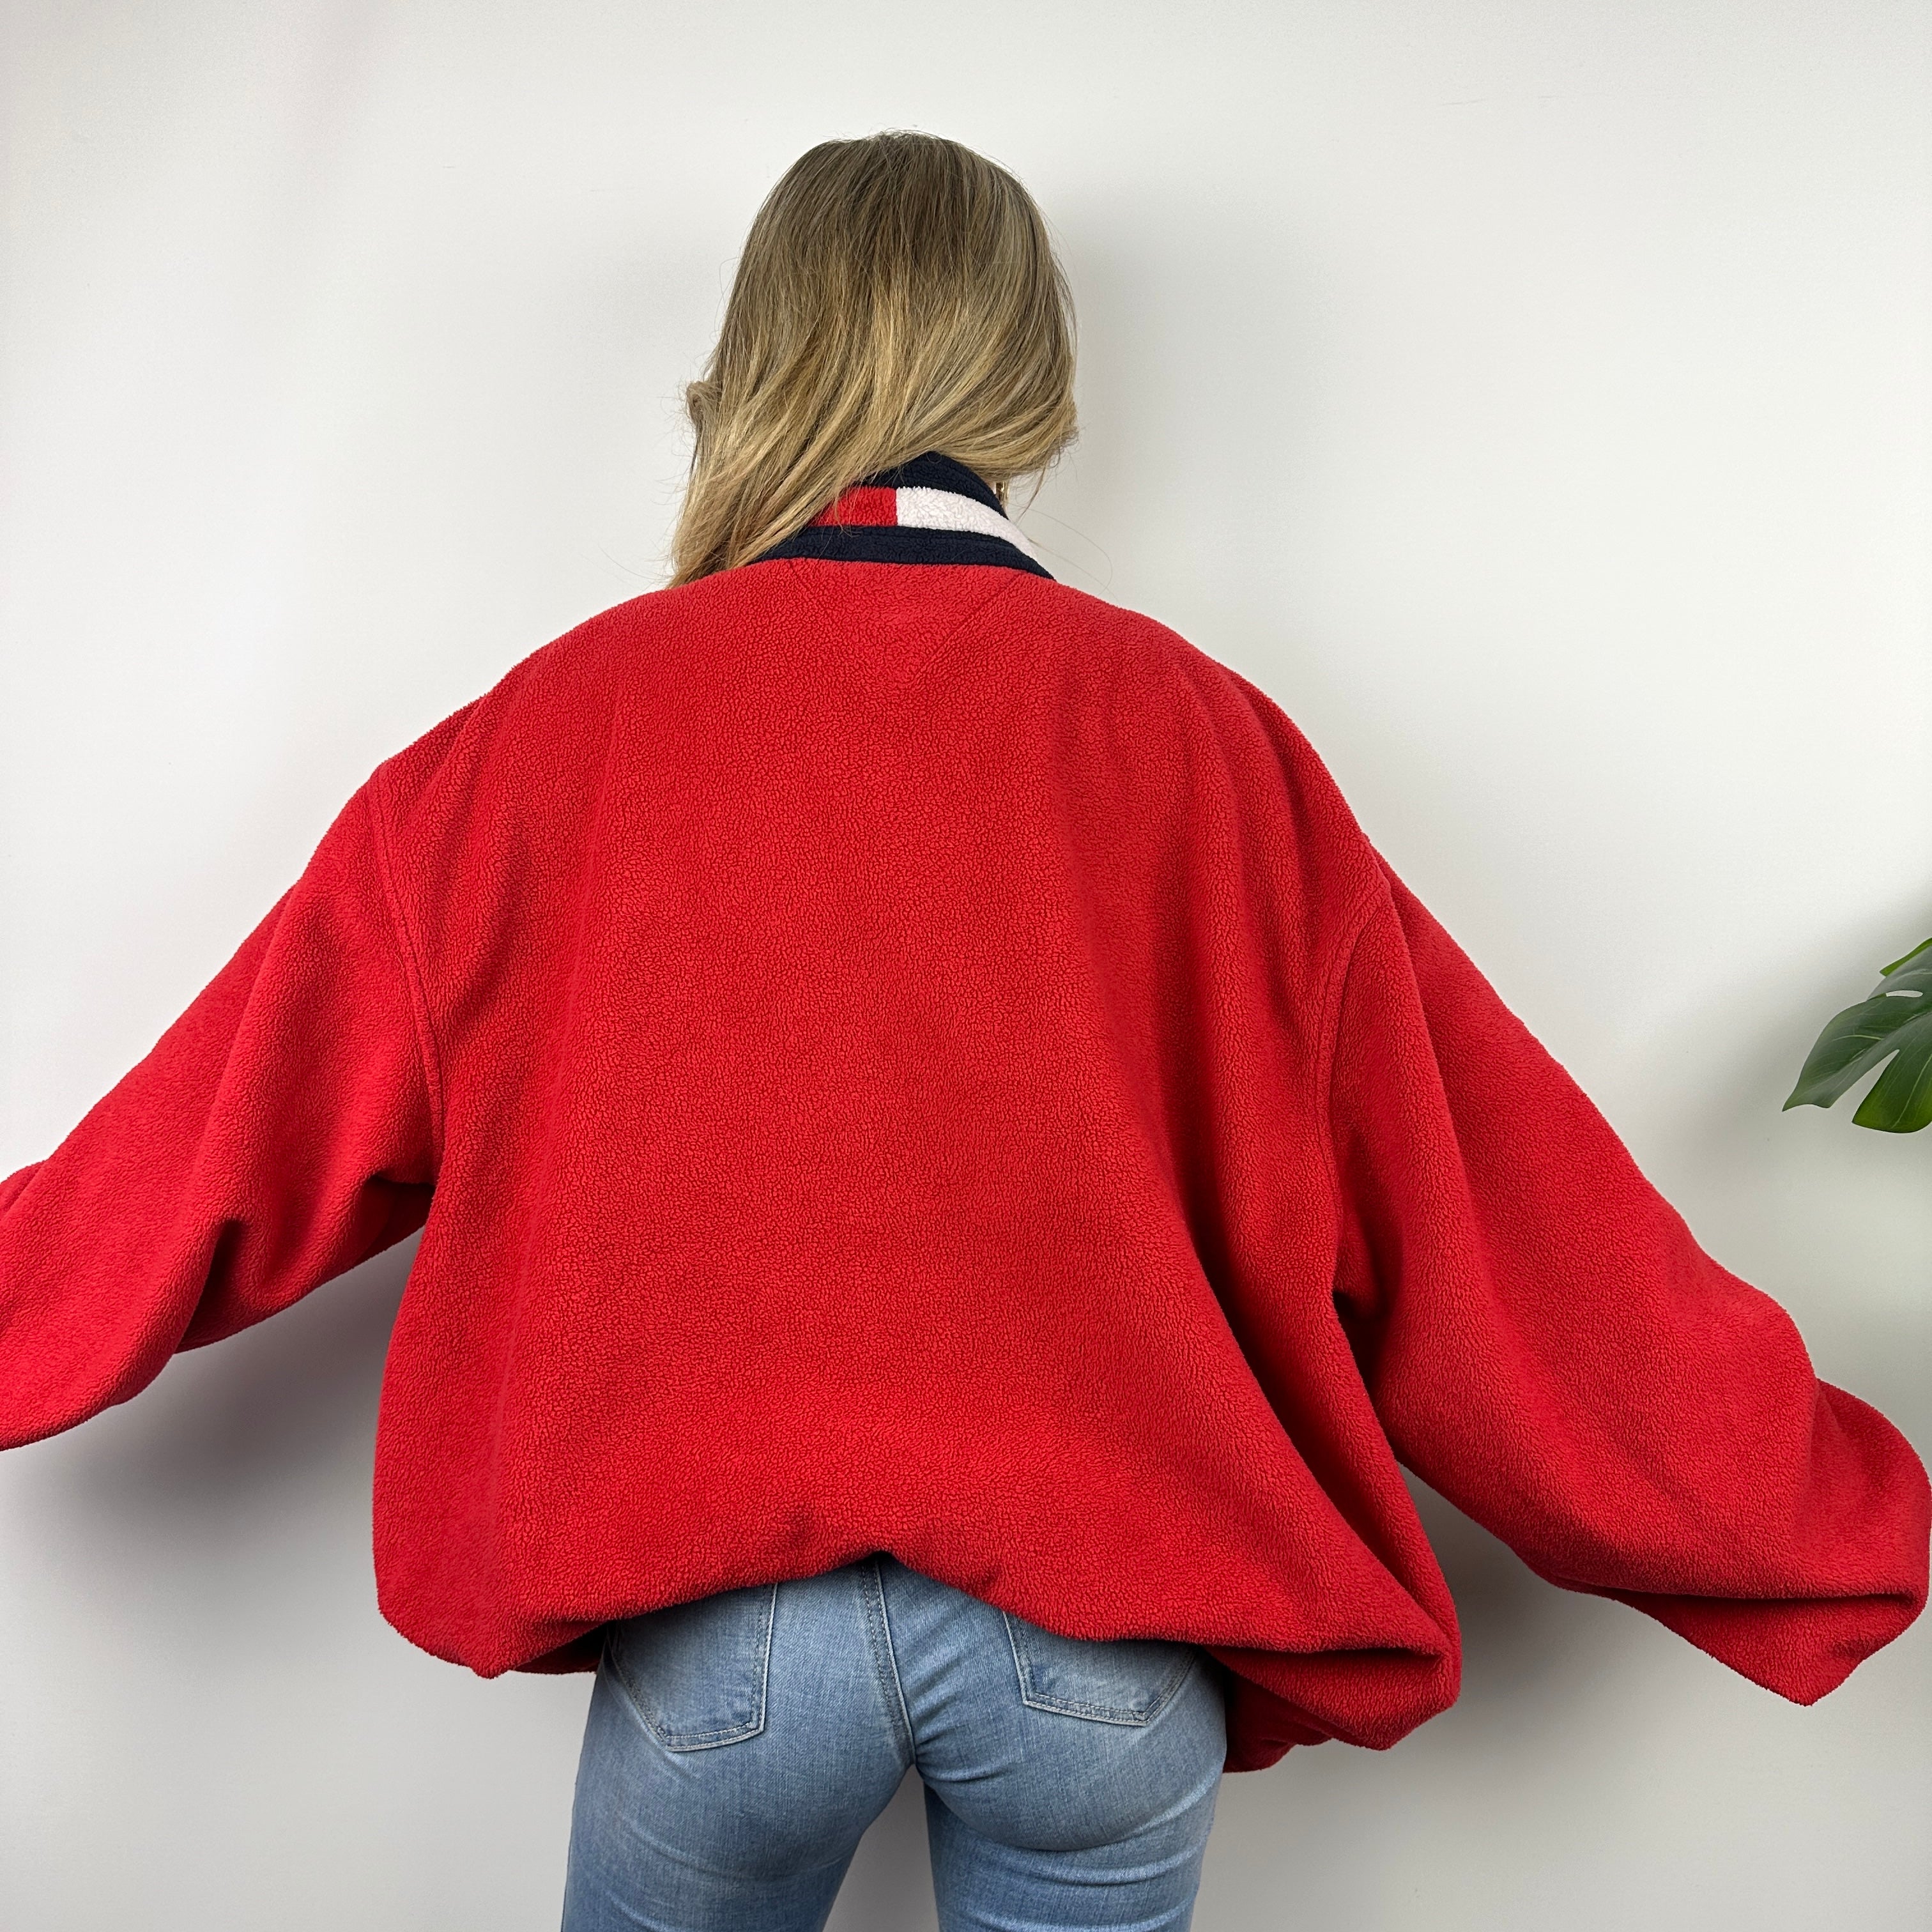 Tommy Hilfiger Red Embroidered Spell Out Teddy Bear Fleece Quarter Zip Sweatshirt (XXL)